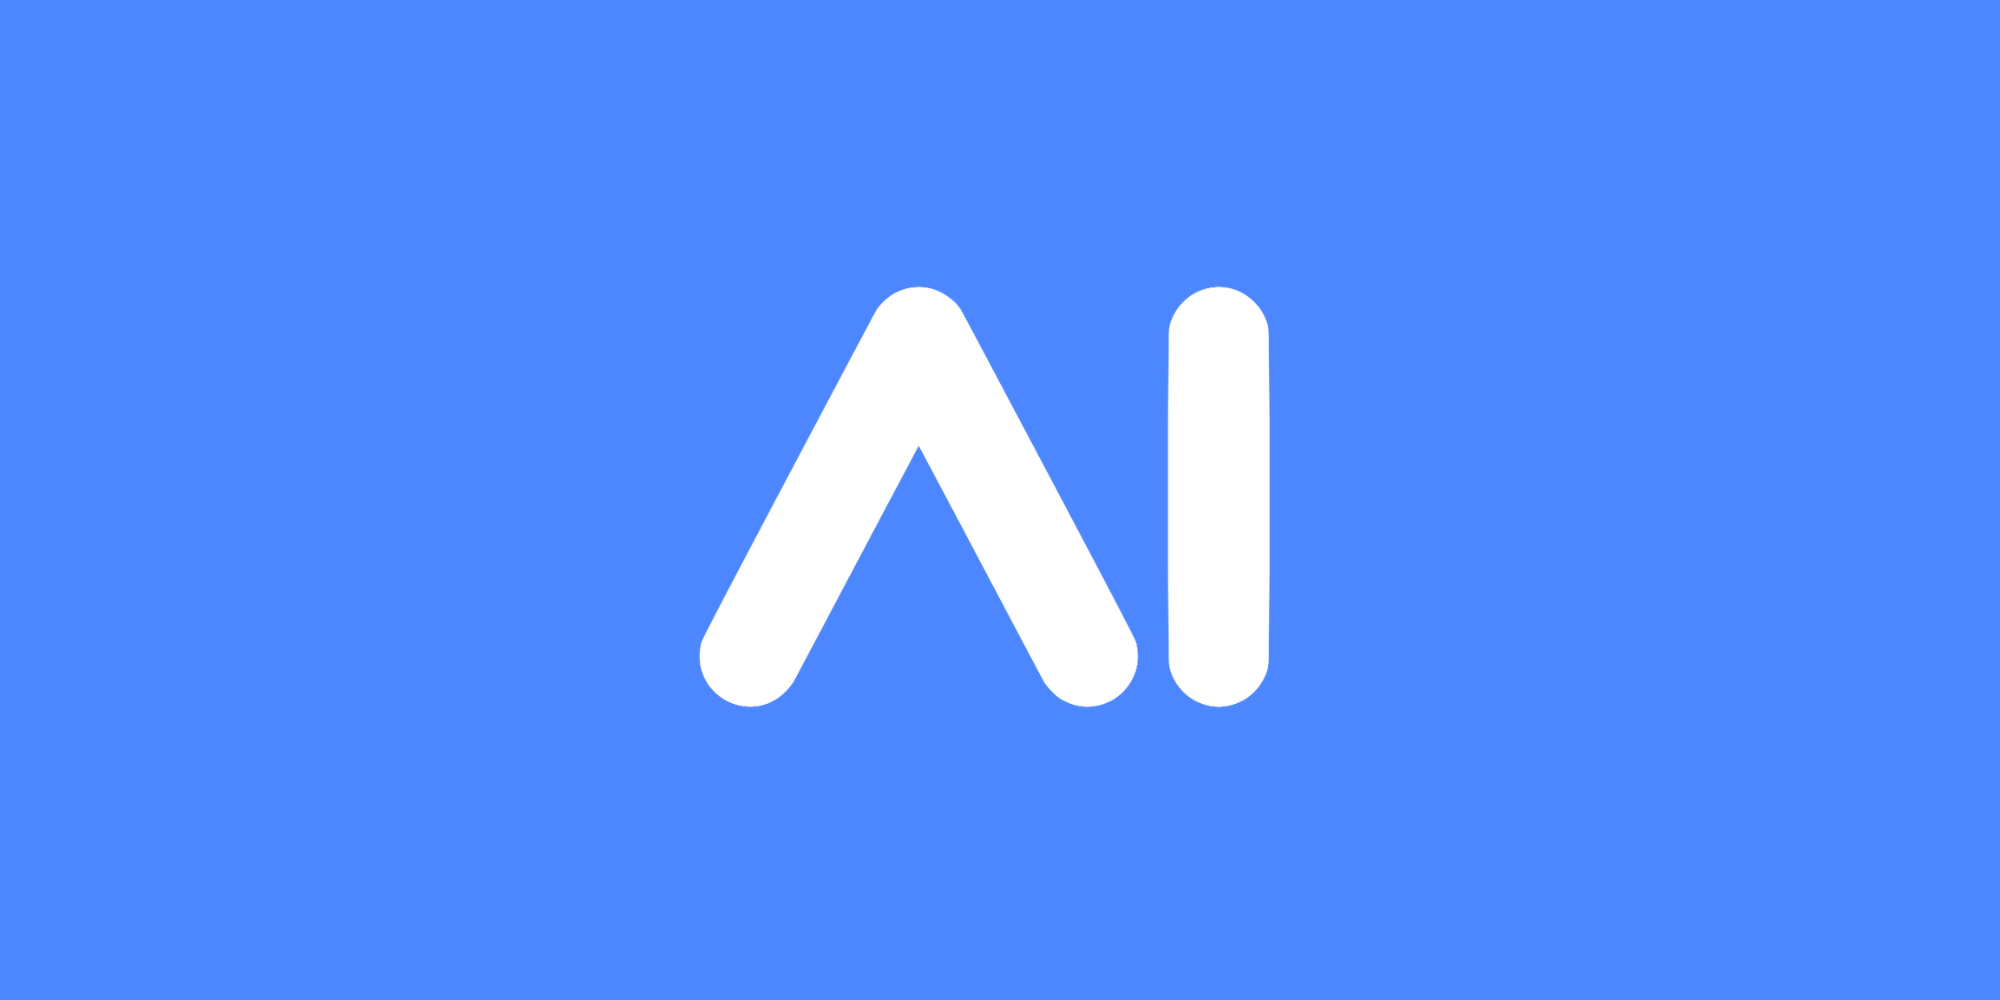 AI app Adobe Express hero image.